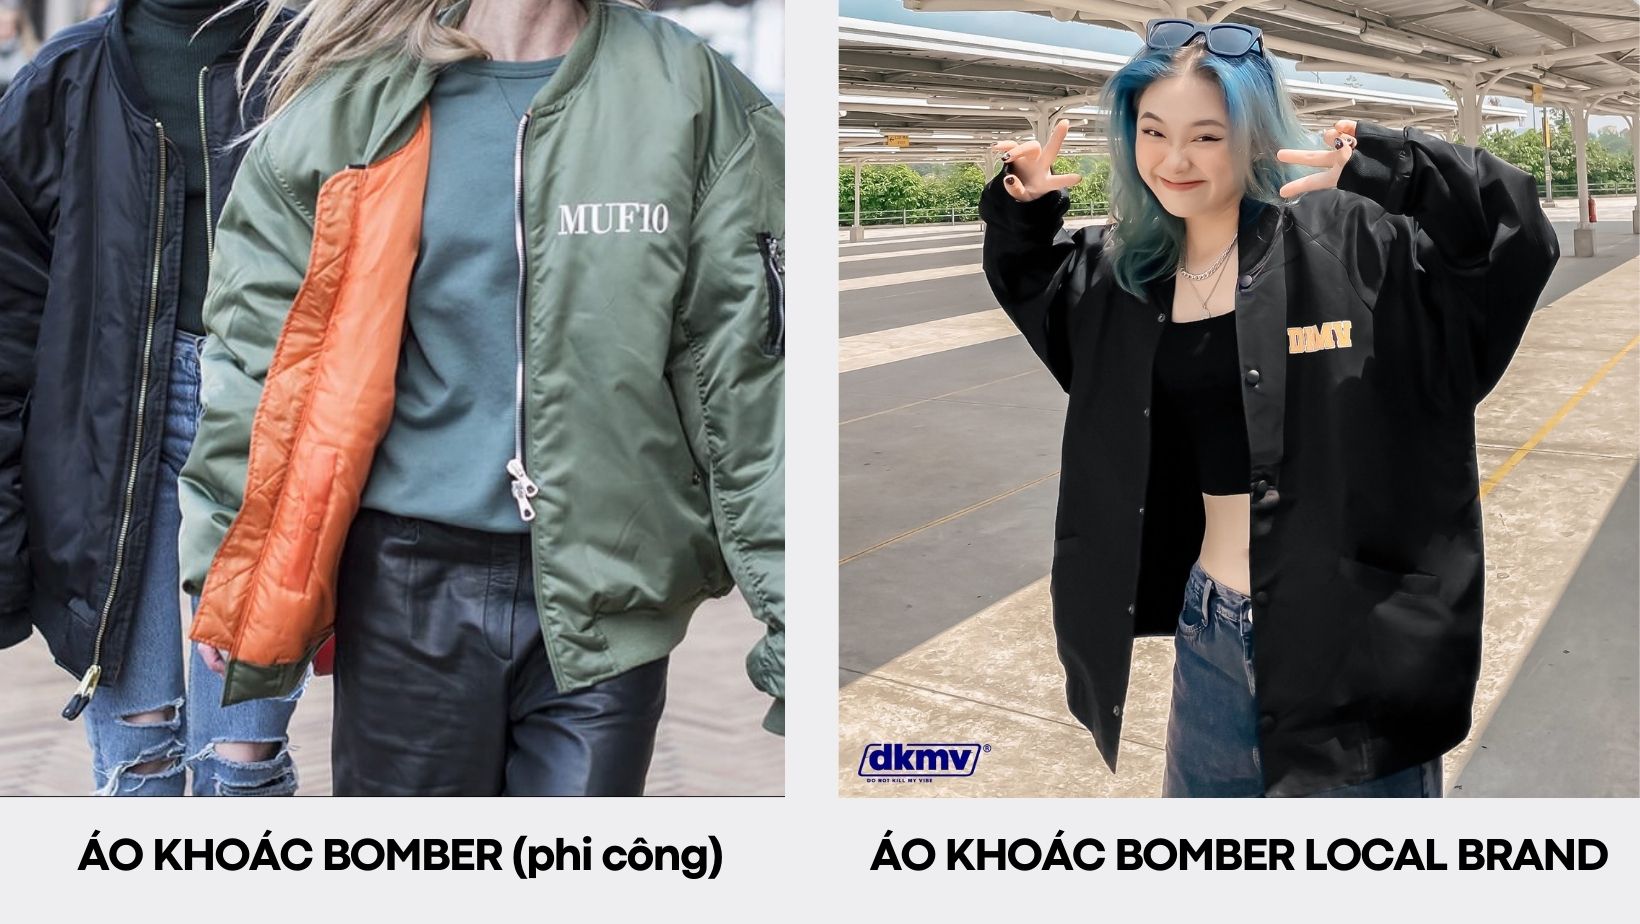 áo khoác bomber local brand dkmv